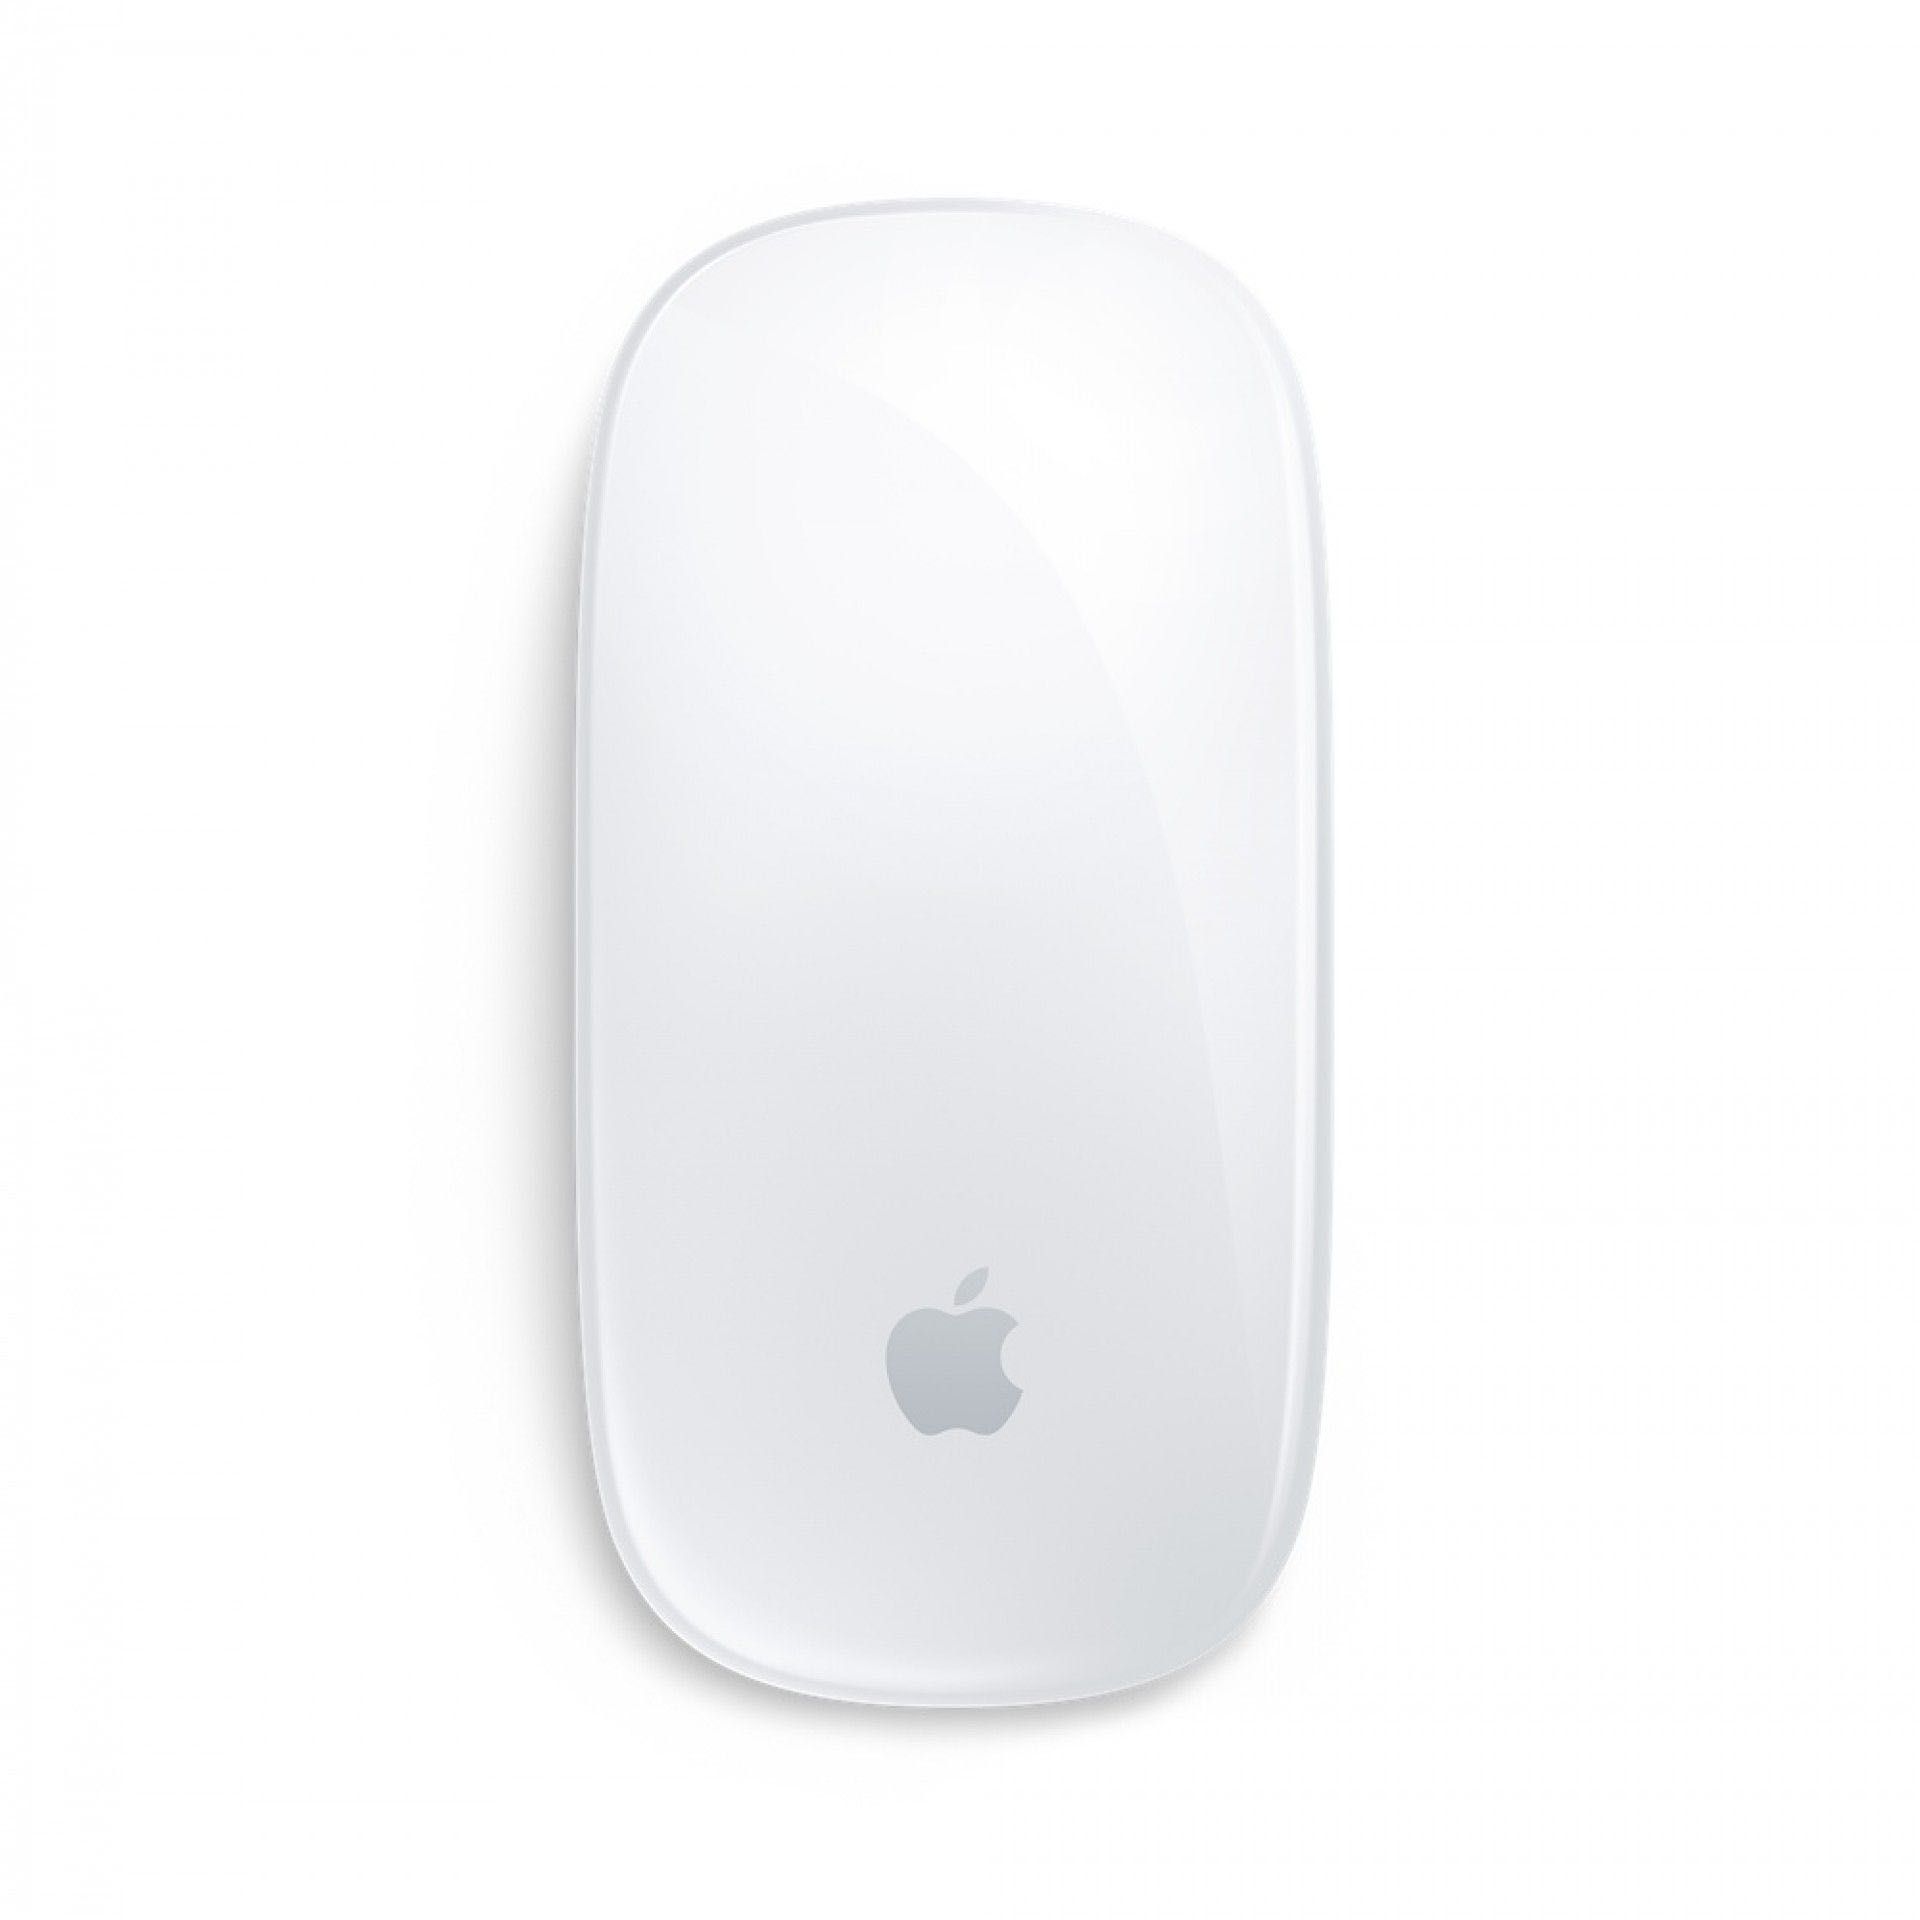 Magic Mouse - Superfície Multi-Touch - Branco [NOVO]